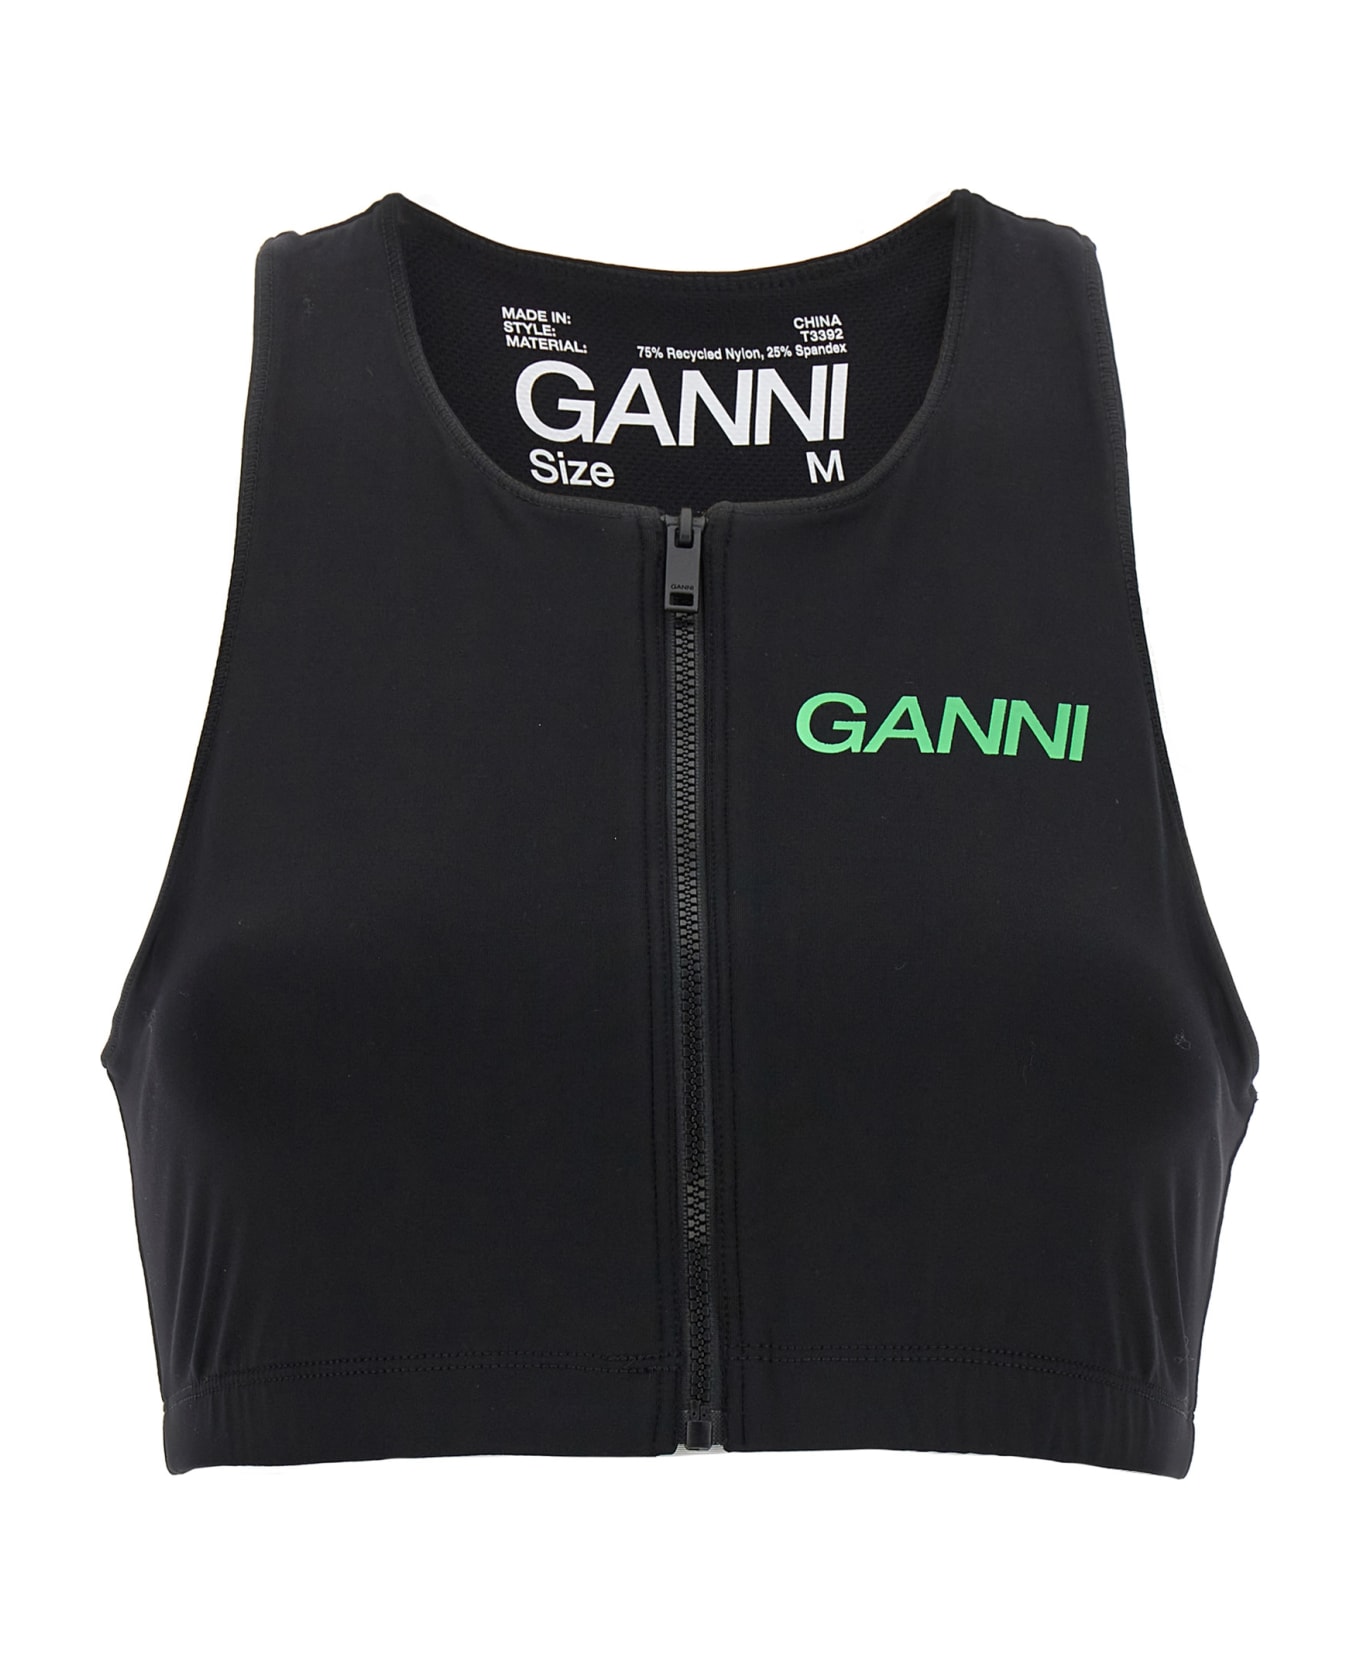 Ganni Logo Sports Top - Black  